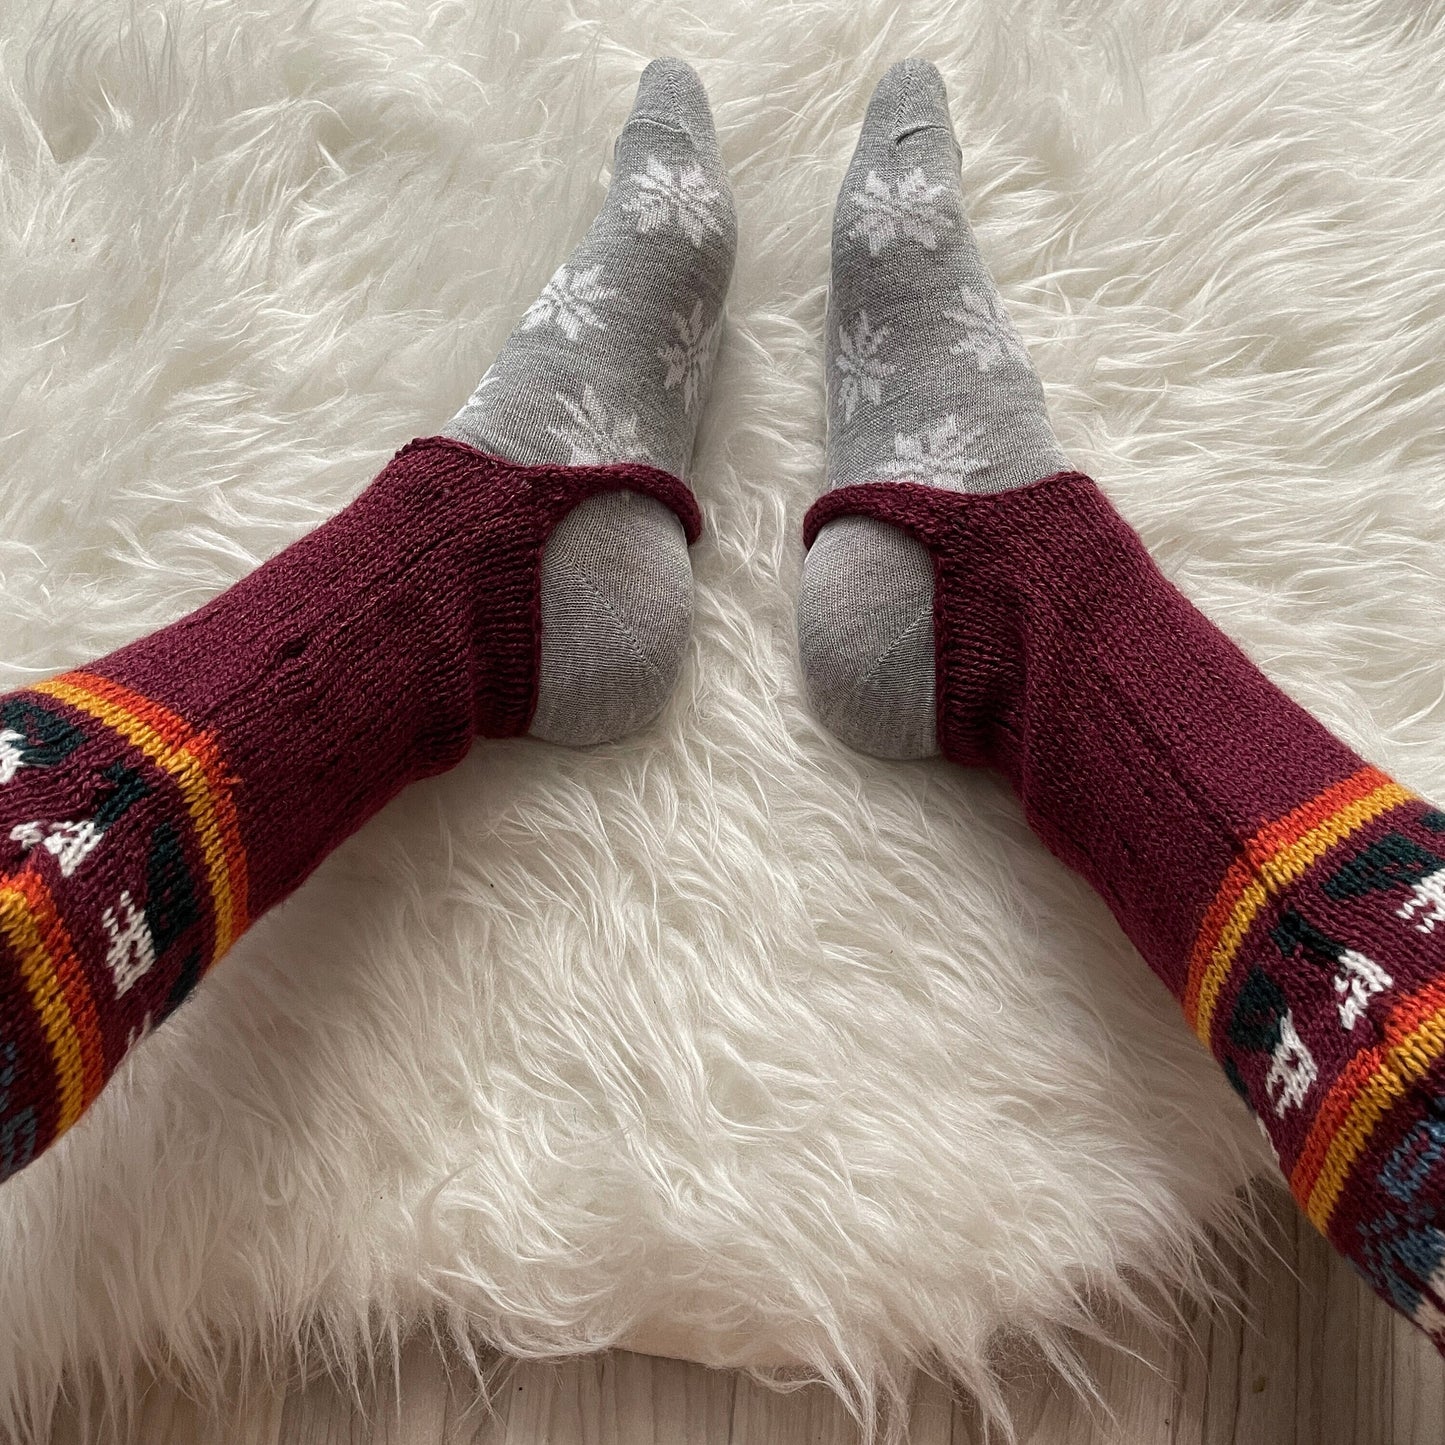 Warm Winter Footless Socks | Leg Warmers Size 6-8 US Adult Socks